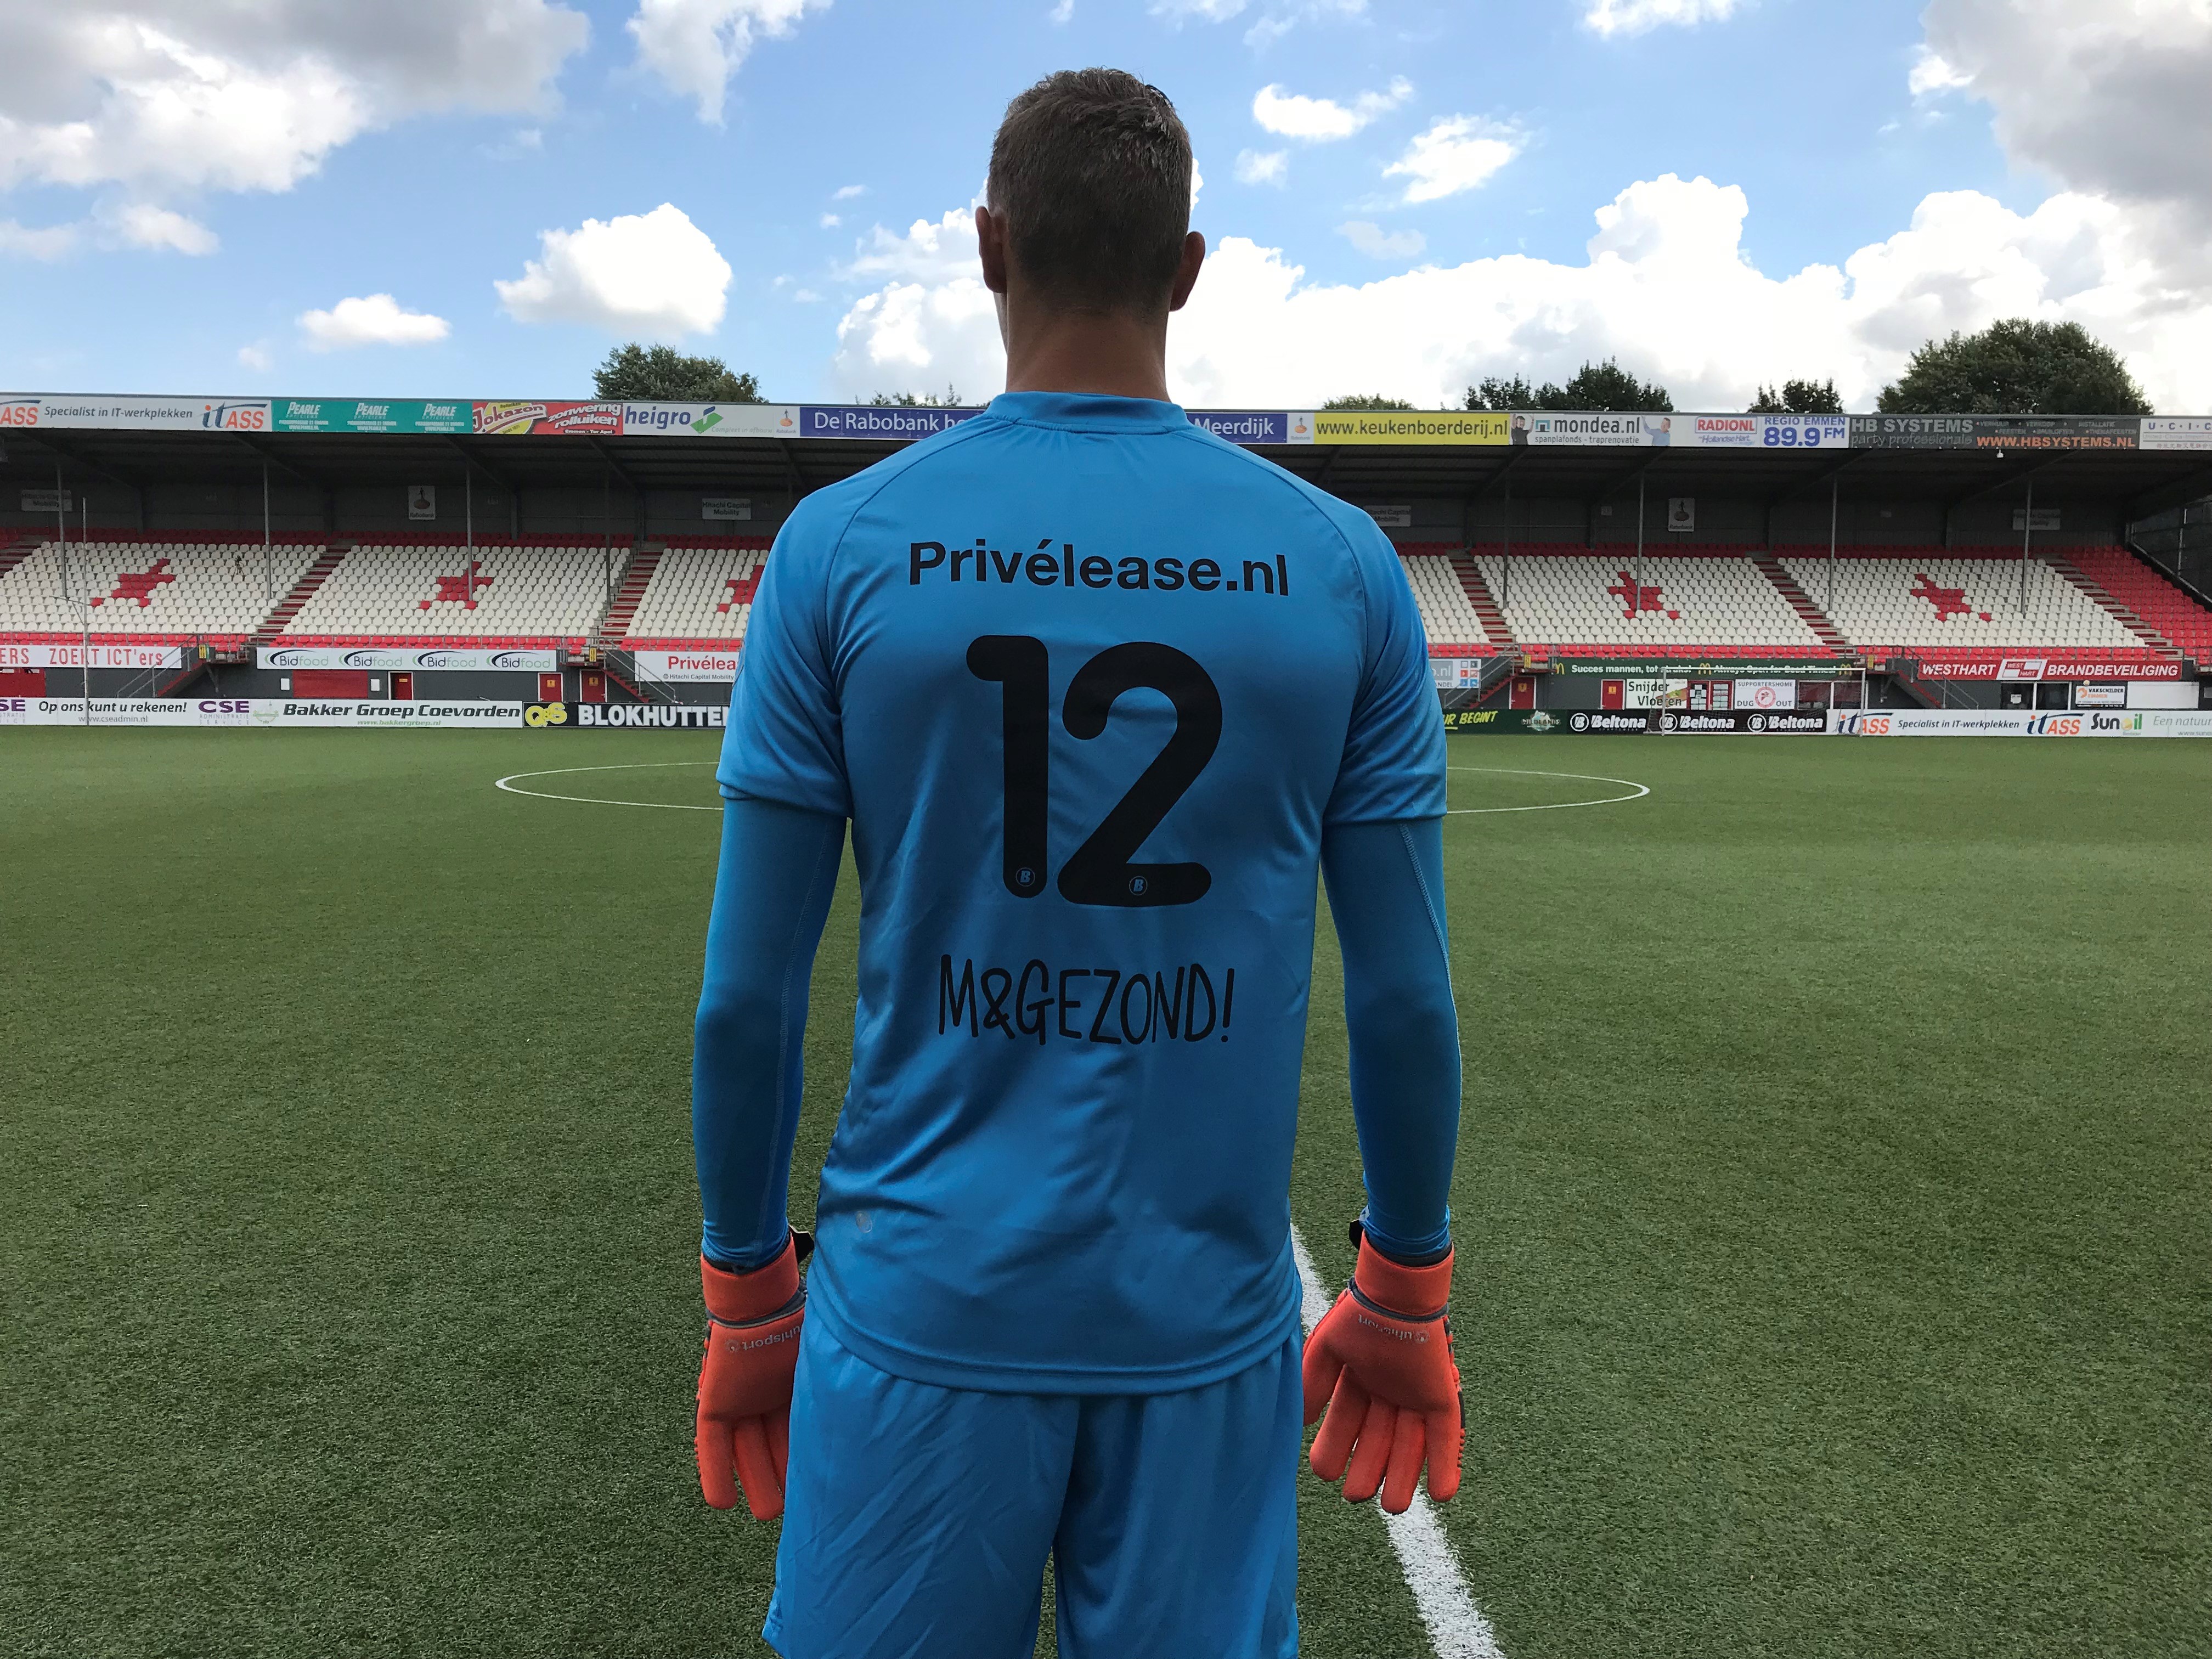 FC Emmen shirtactie kjell scherpen m&gezond!